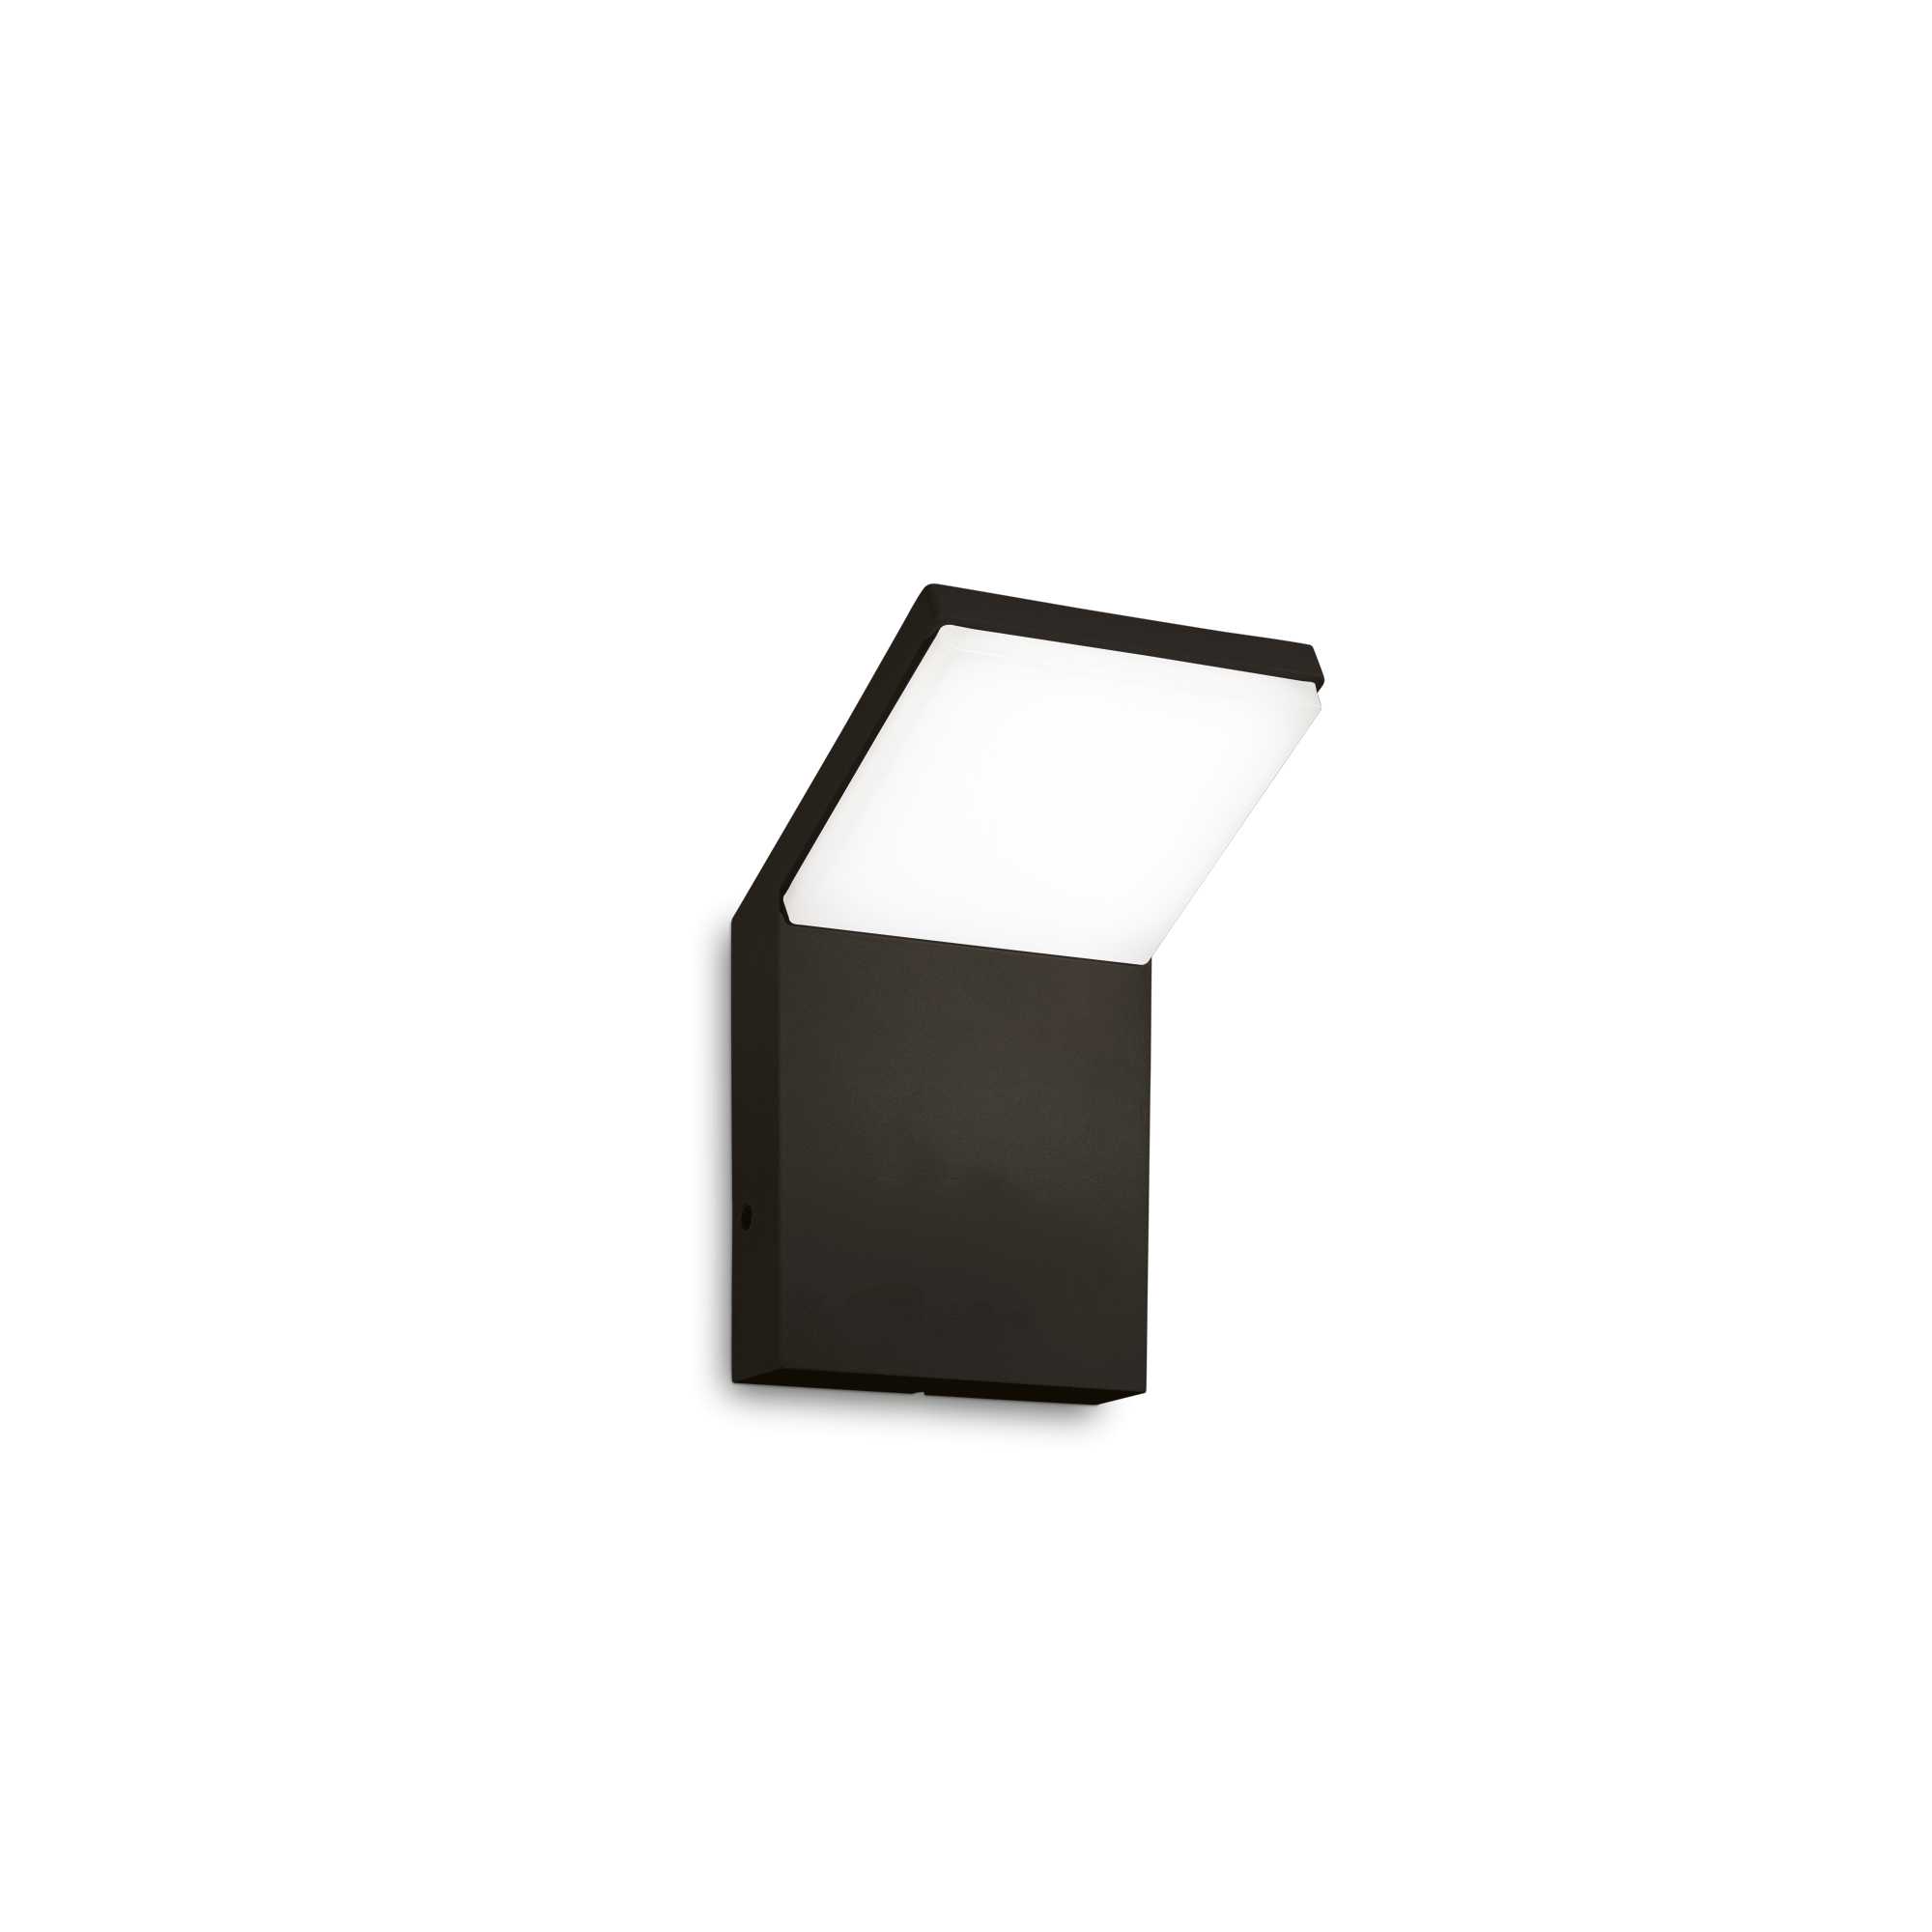 AD hotelska oprema Vanjska zidna lampa Style ap (3000k)- Crne boje slika proizvoda